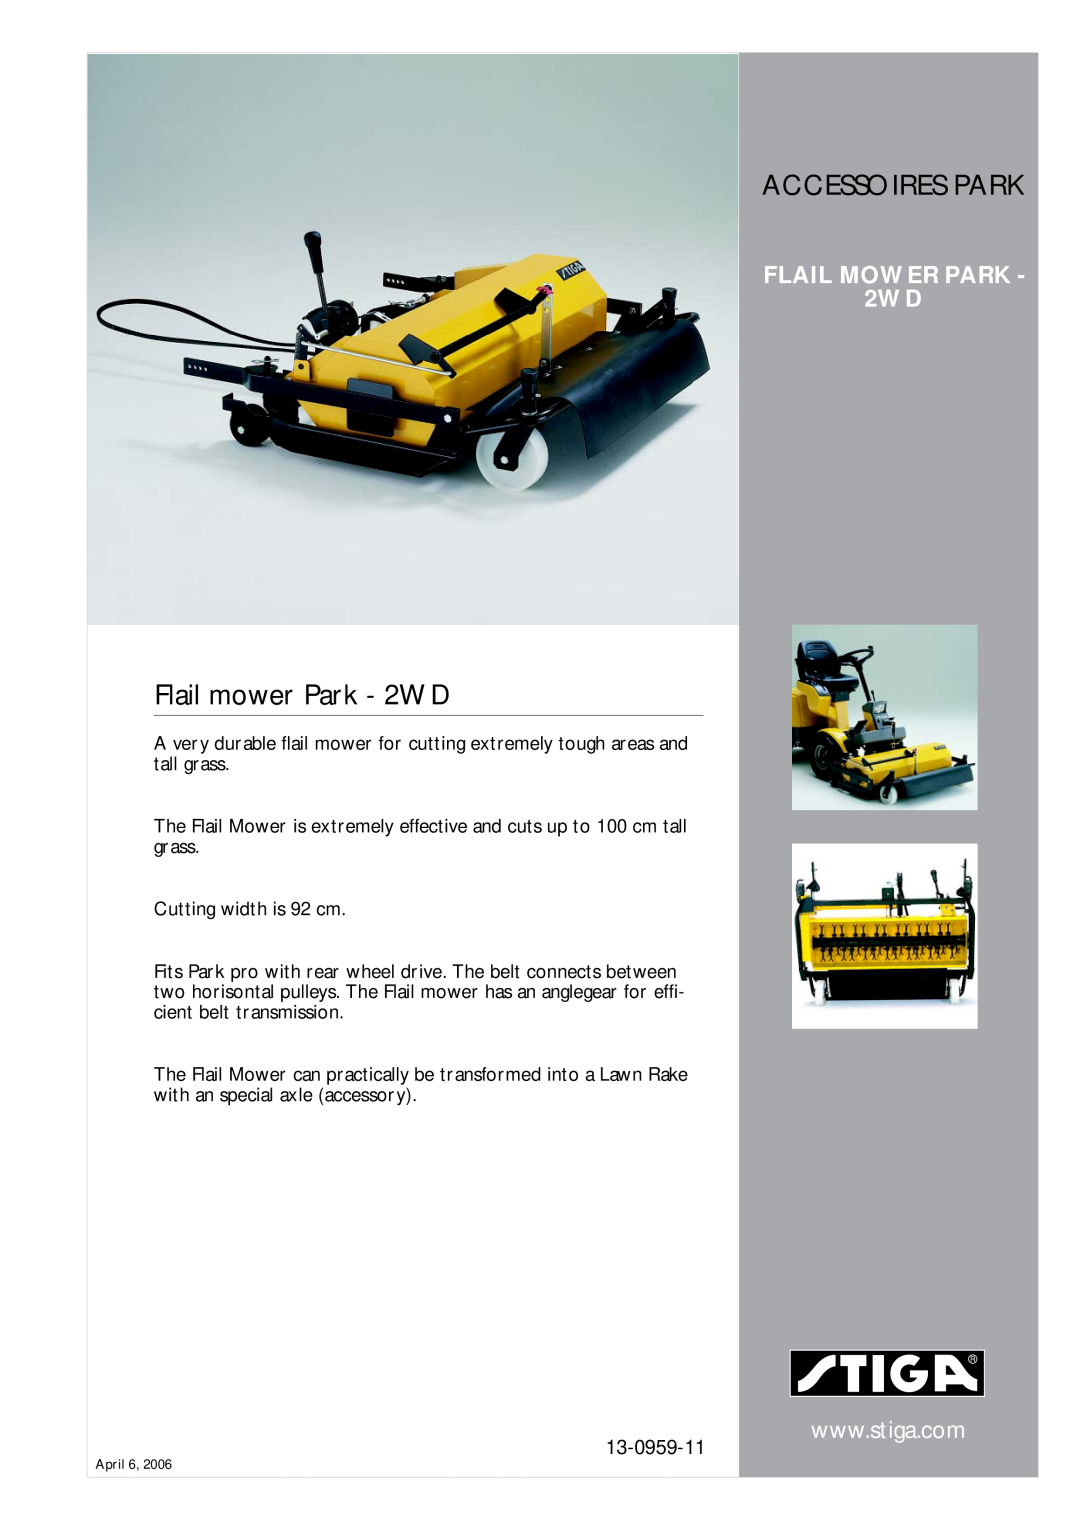 Stiga 13-0959-11 manual Accessoires Park, Flail mower Park - 2WD, FLAIL MOWER PARK 2WD 